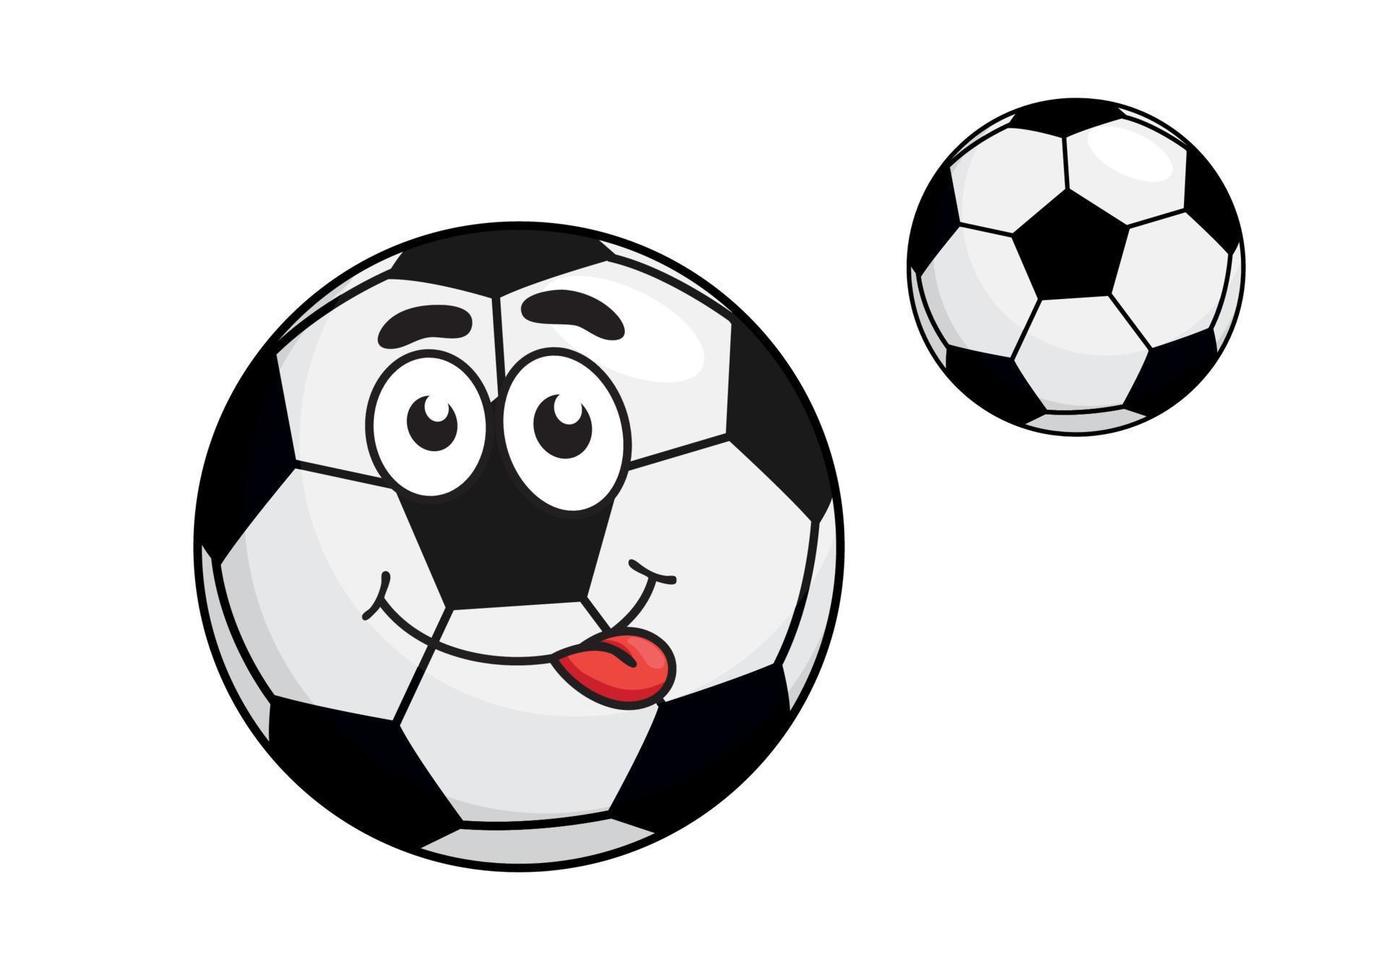 Cute cartoon soccer ball with a protruding tongue vector